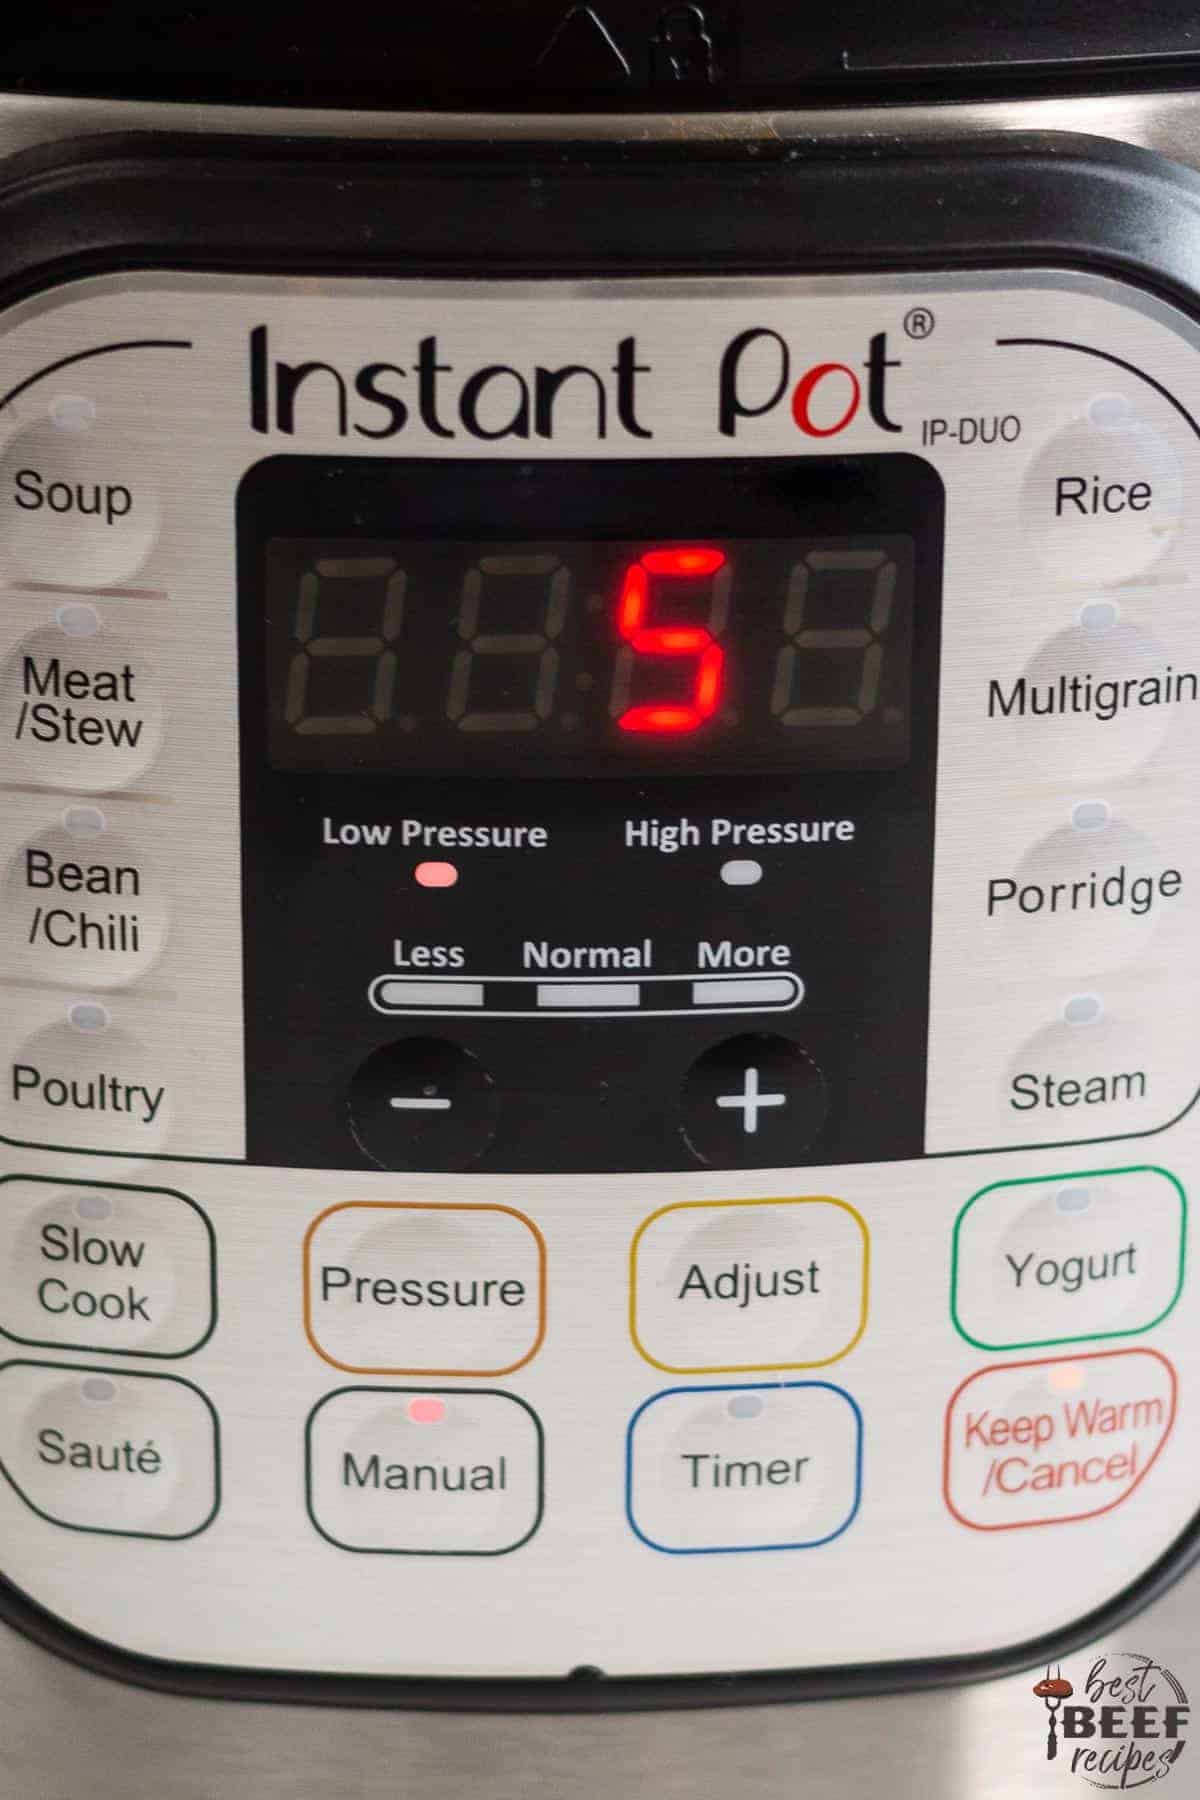 Instant Pot set to 5 minutes for Instant Pot Prime Rib